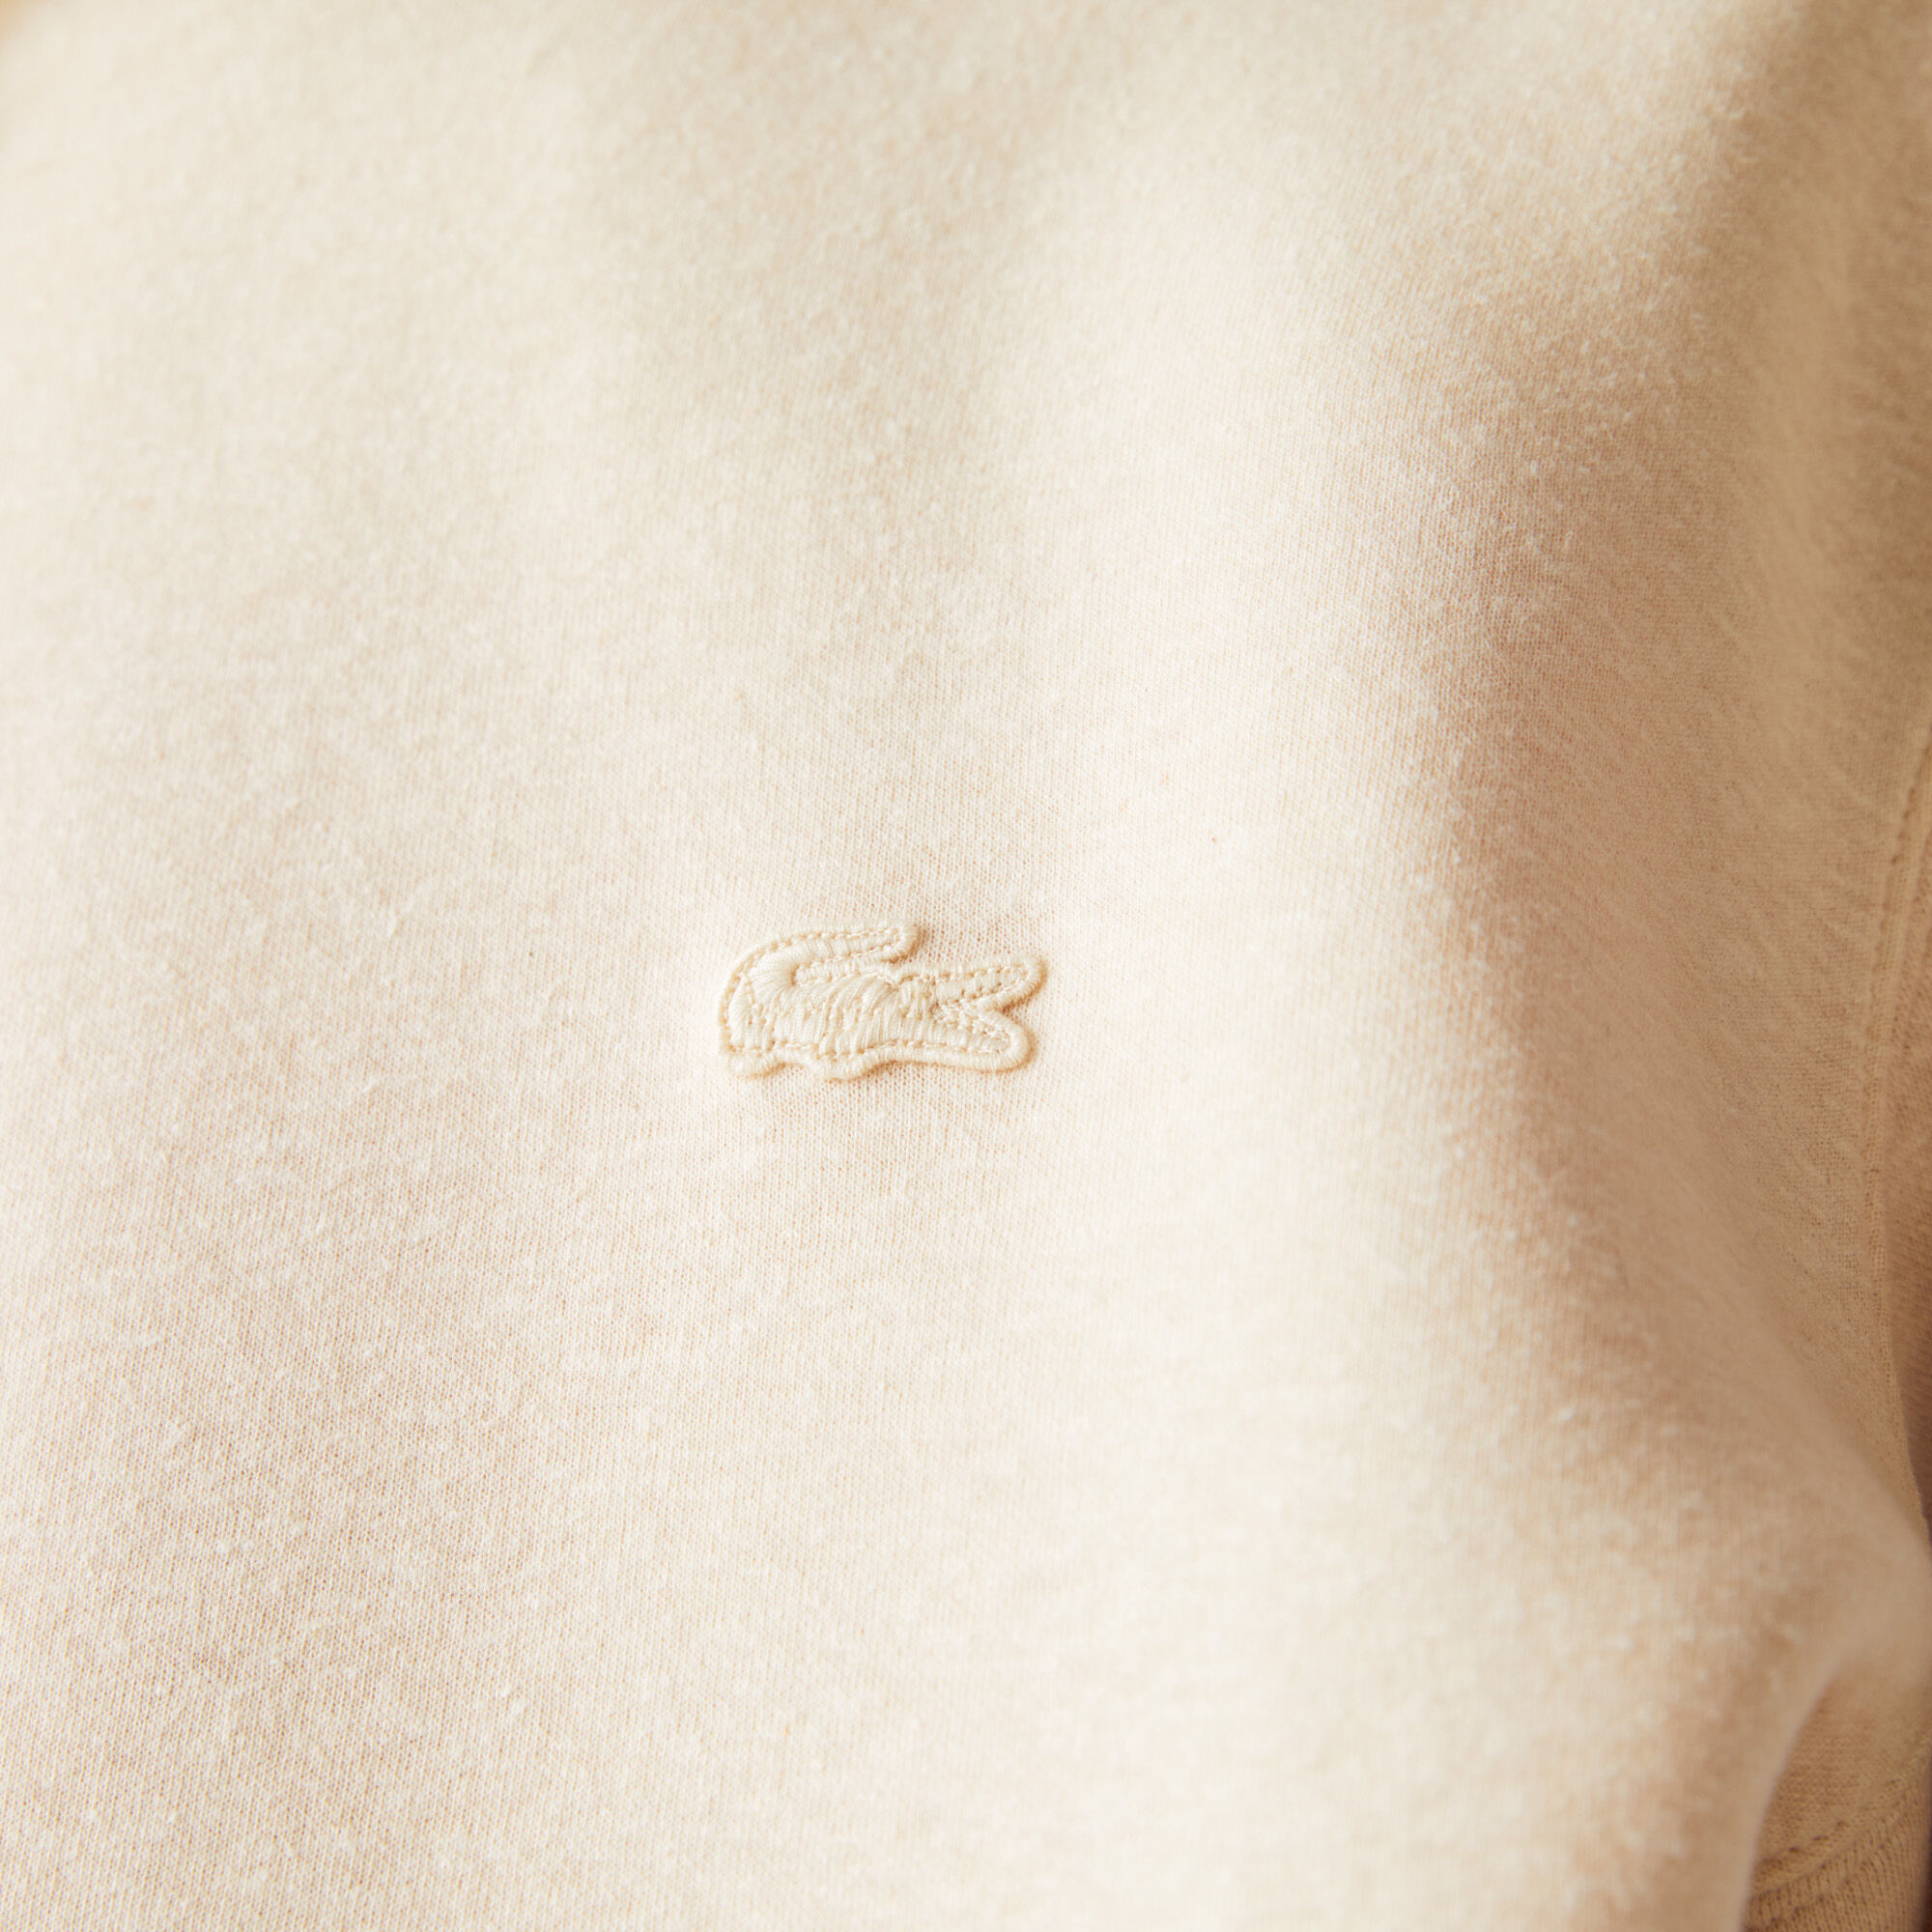 Men’s Hooded Contrast Pocket Cotton Blend Sweatshirt